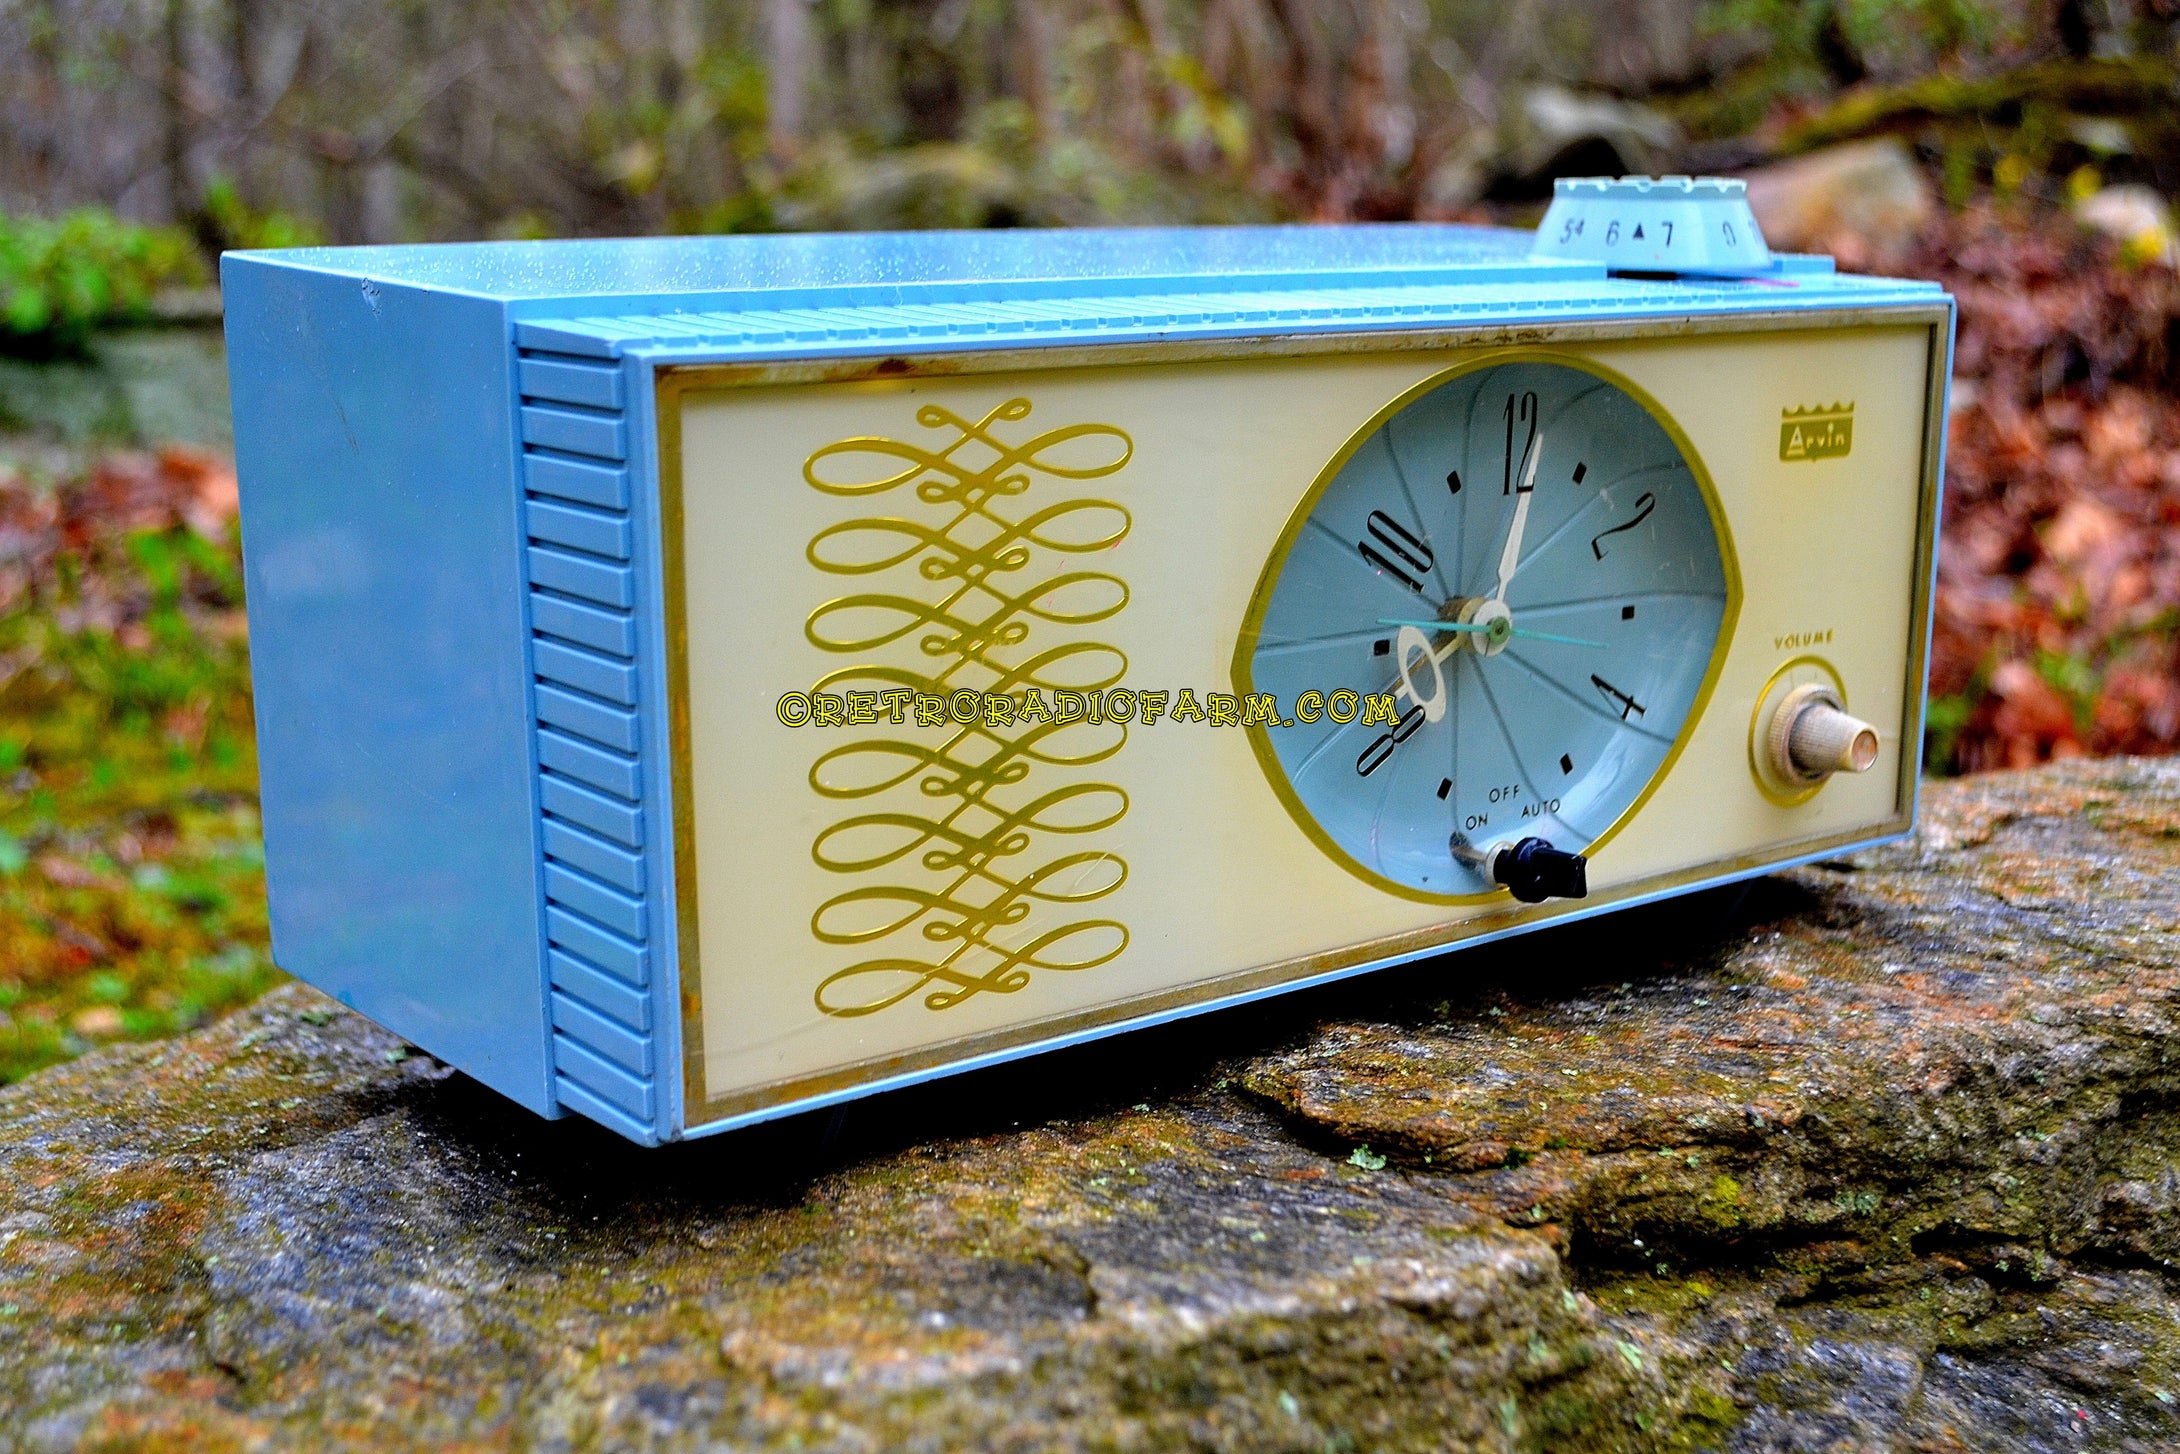 SOLD! - July 8, 2018 - WEDGEWOOD BLUE Retro Mid Century Vintage 1965 Arvin Model 53R05 AM Tube Clock Radio Works Great Looks Great! - [product_type} - Arvin - Retro Radio Farm